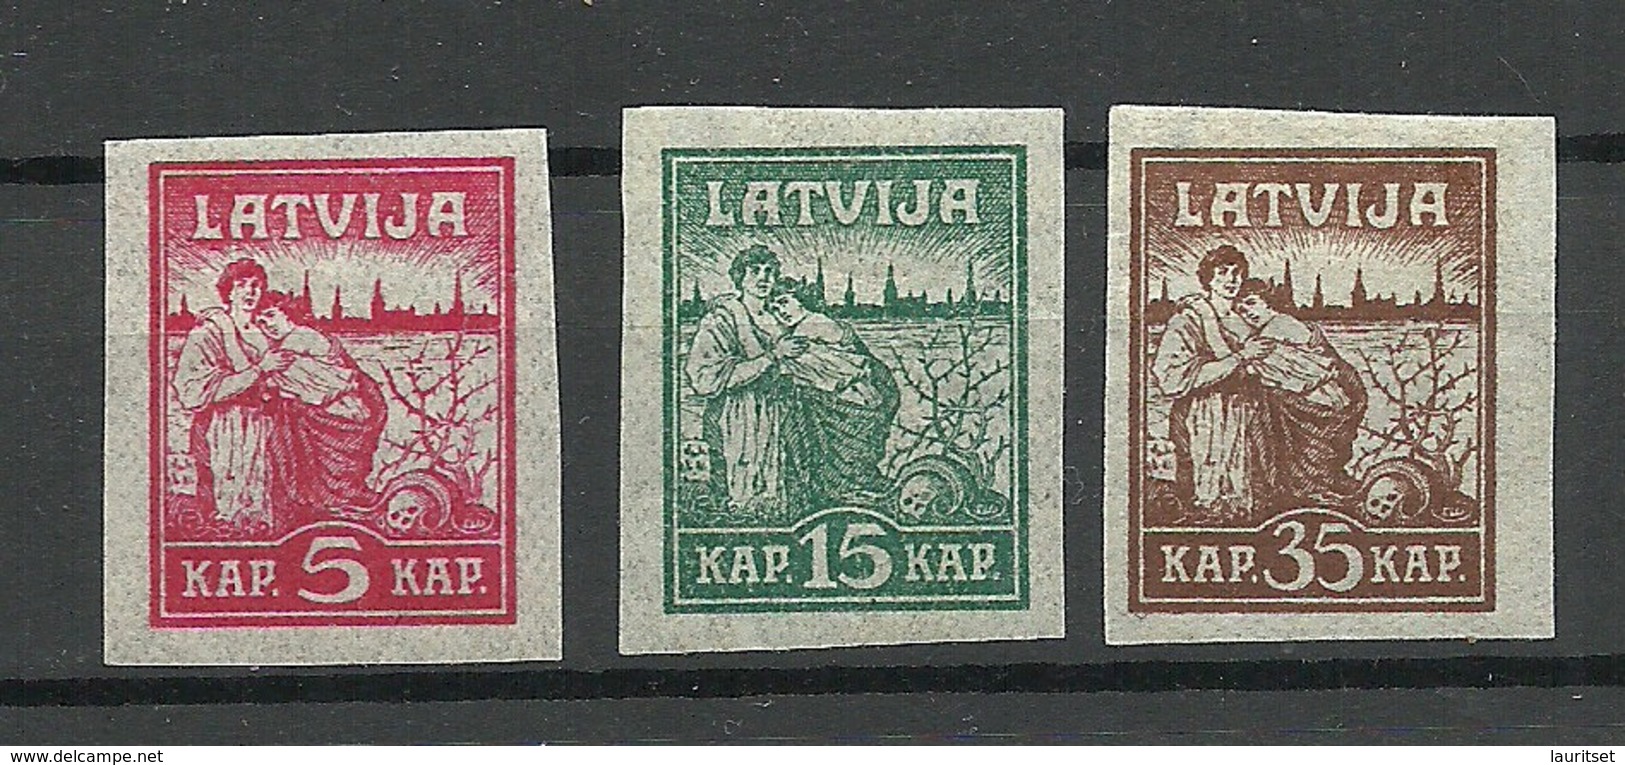 LETTLAND Latvia 1919 Michel 25 - 27 Y (Zigarettenpapier) MNH/MH - Lettland